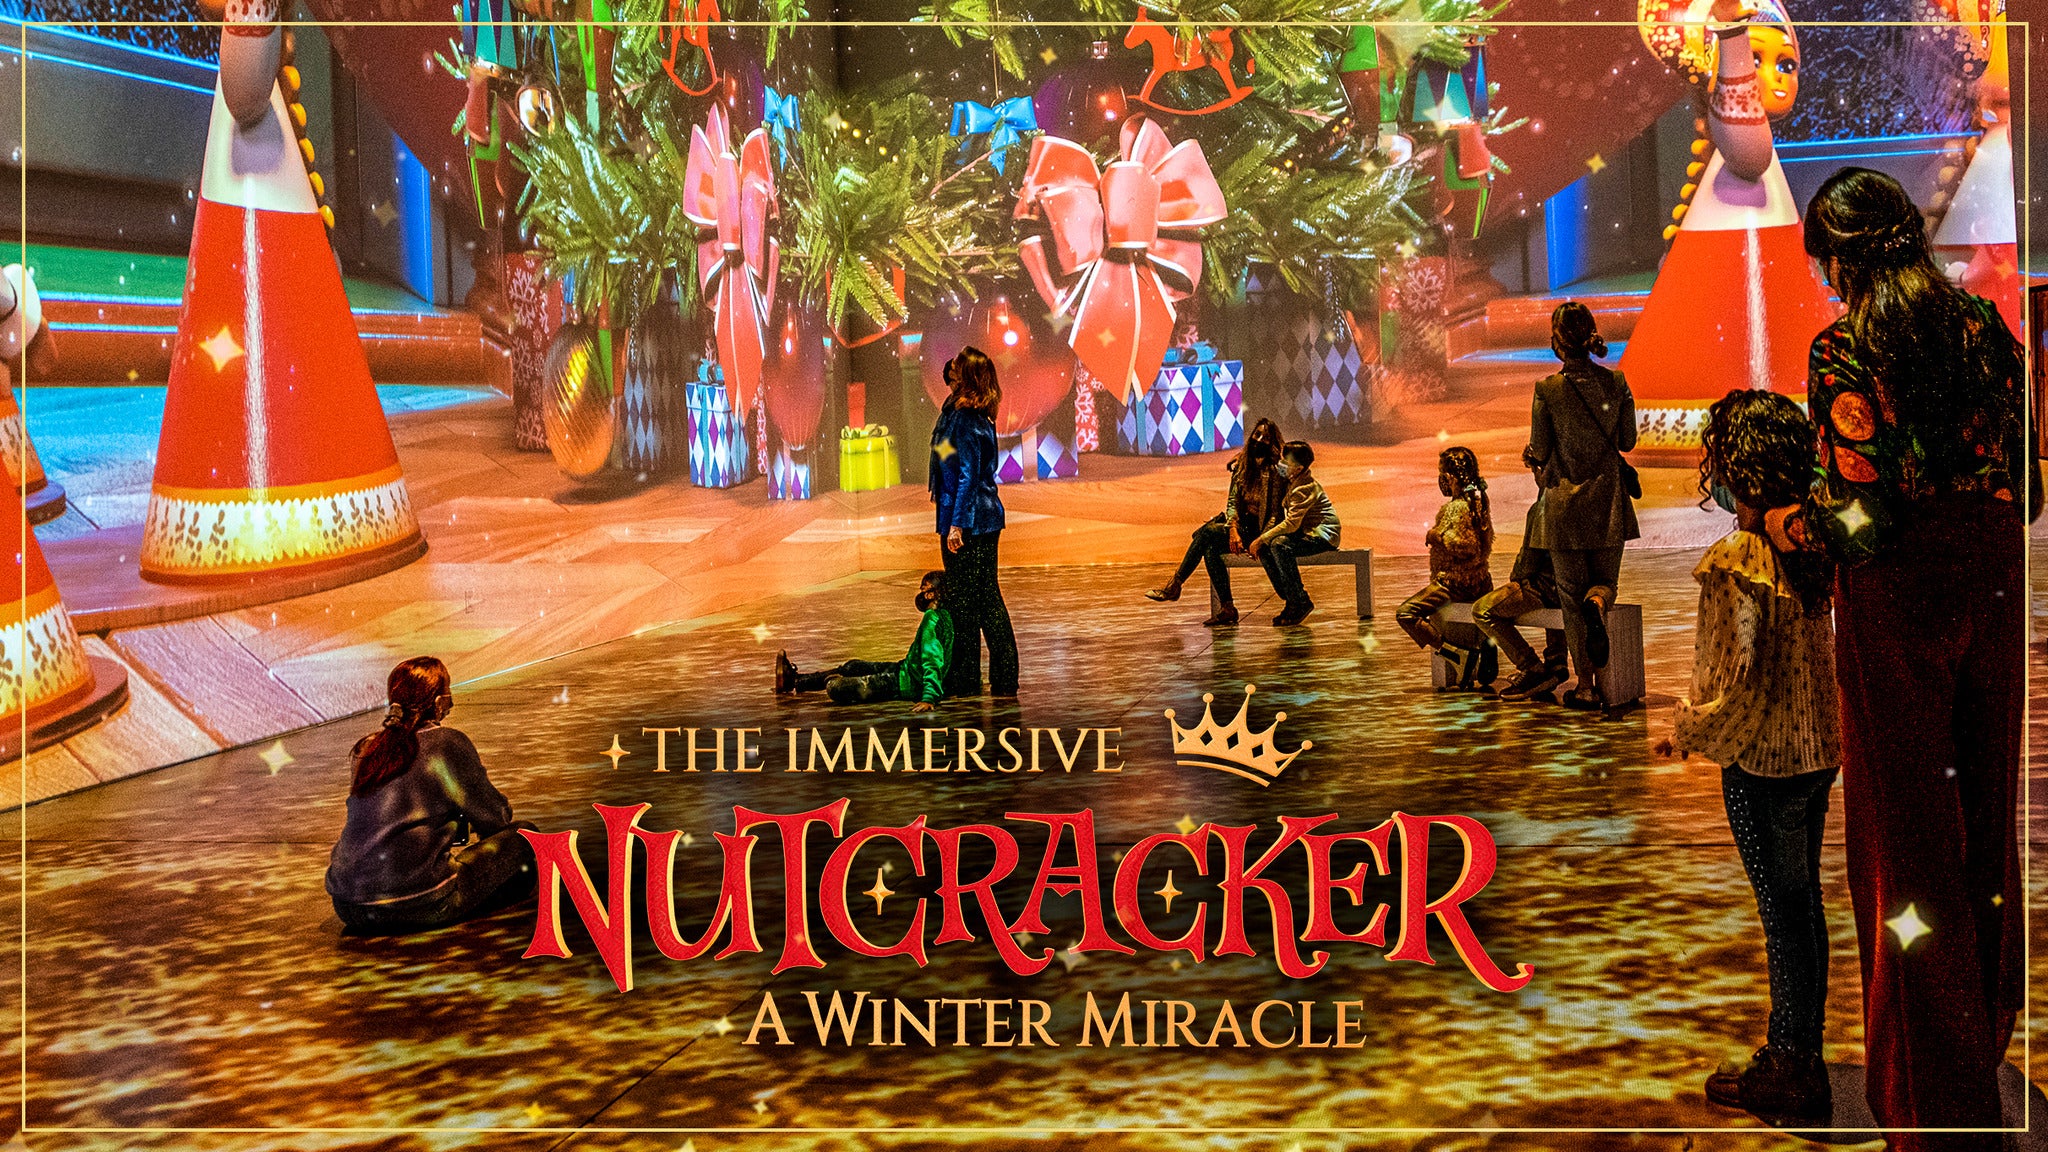 The Immersive Nutcracker - Kansas City - Kansas City, MO 64153